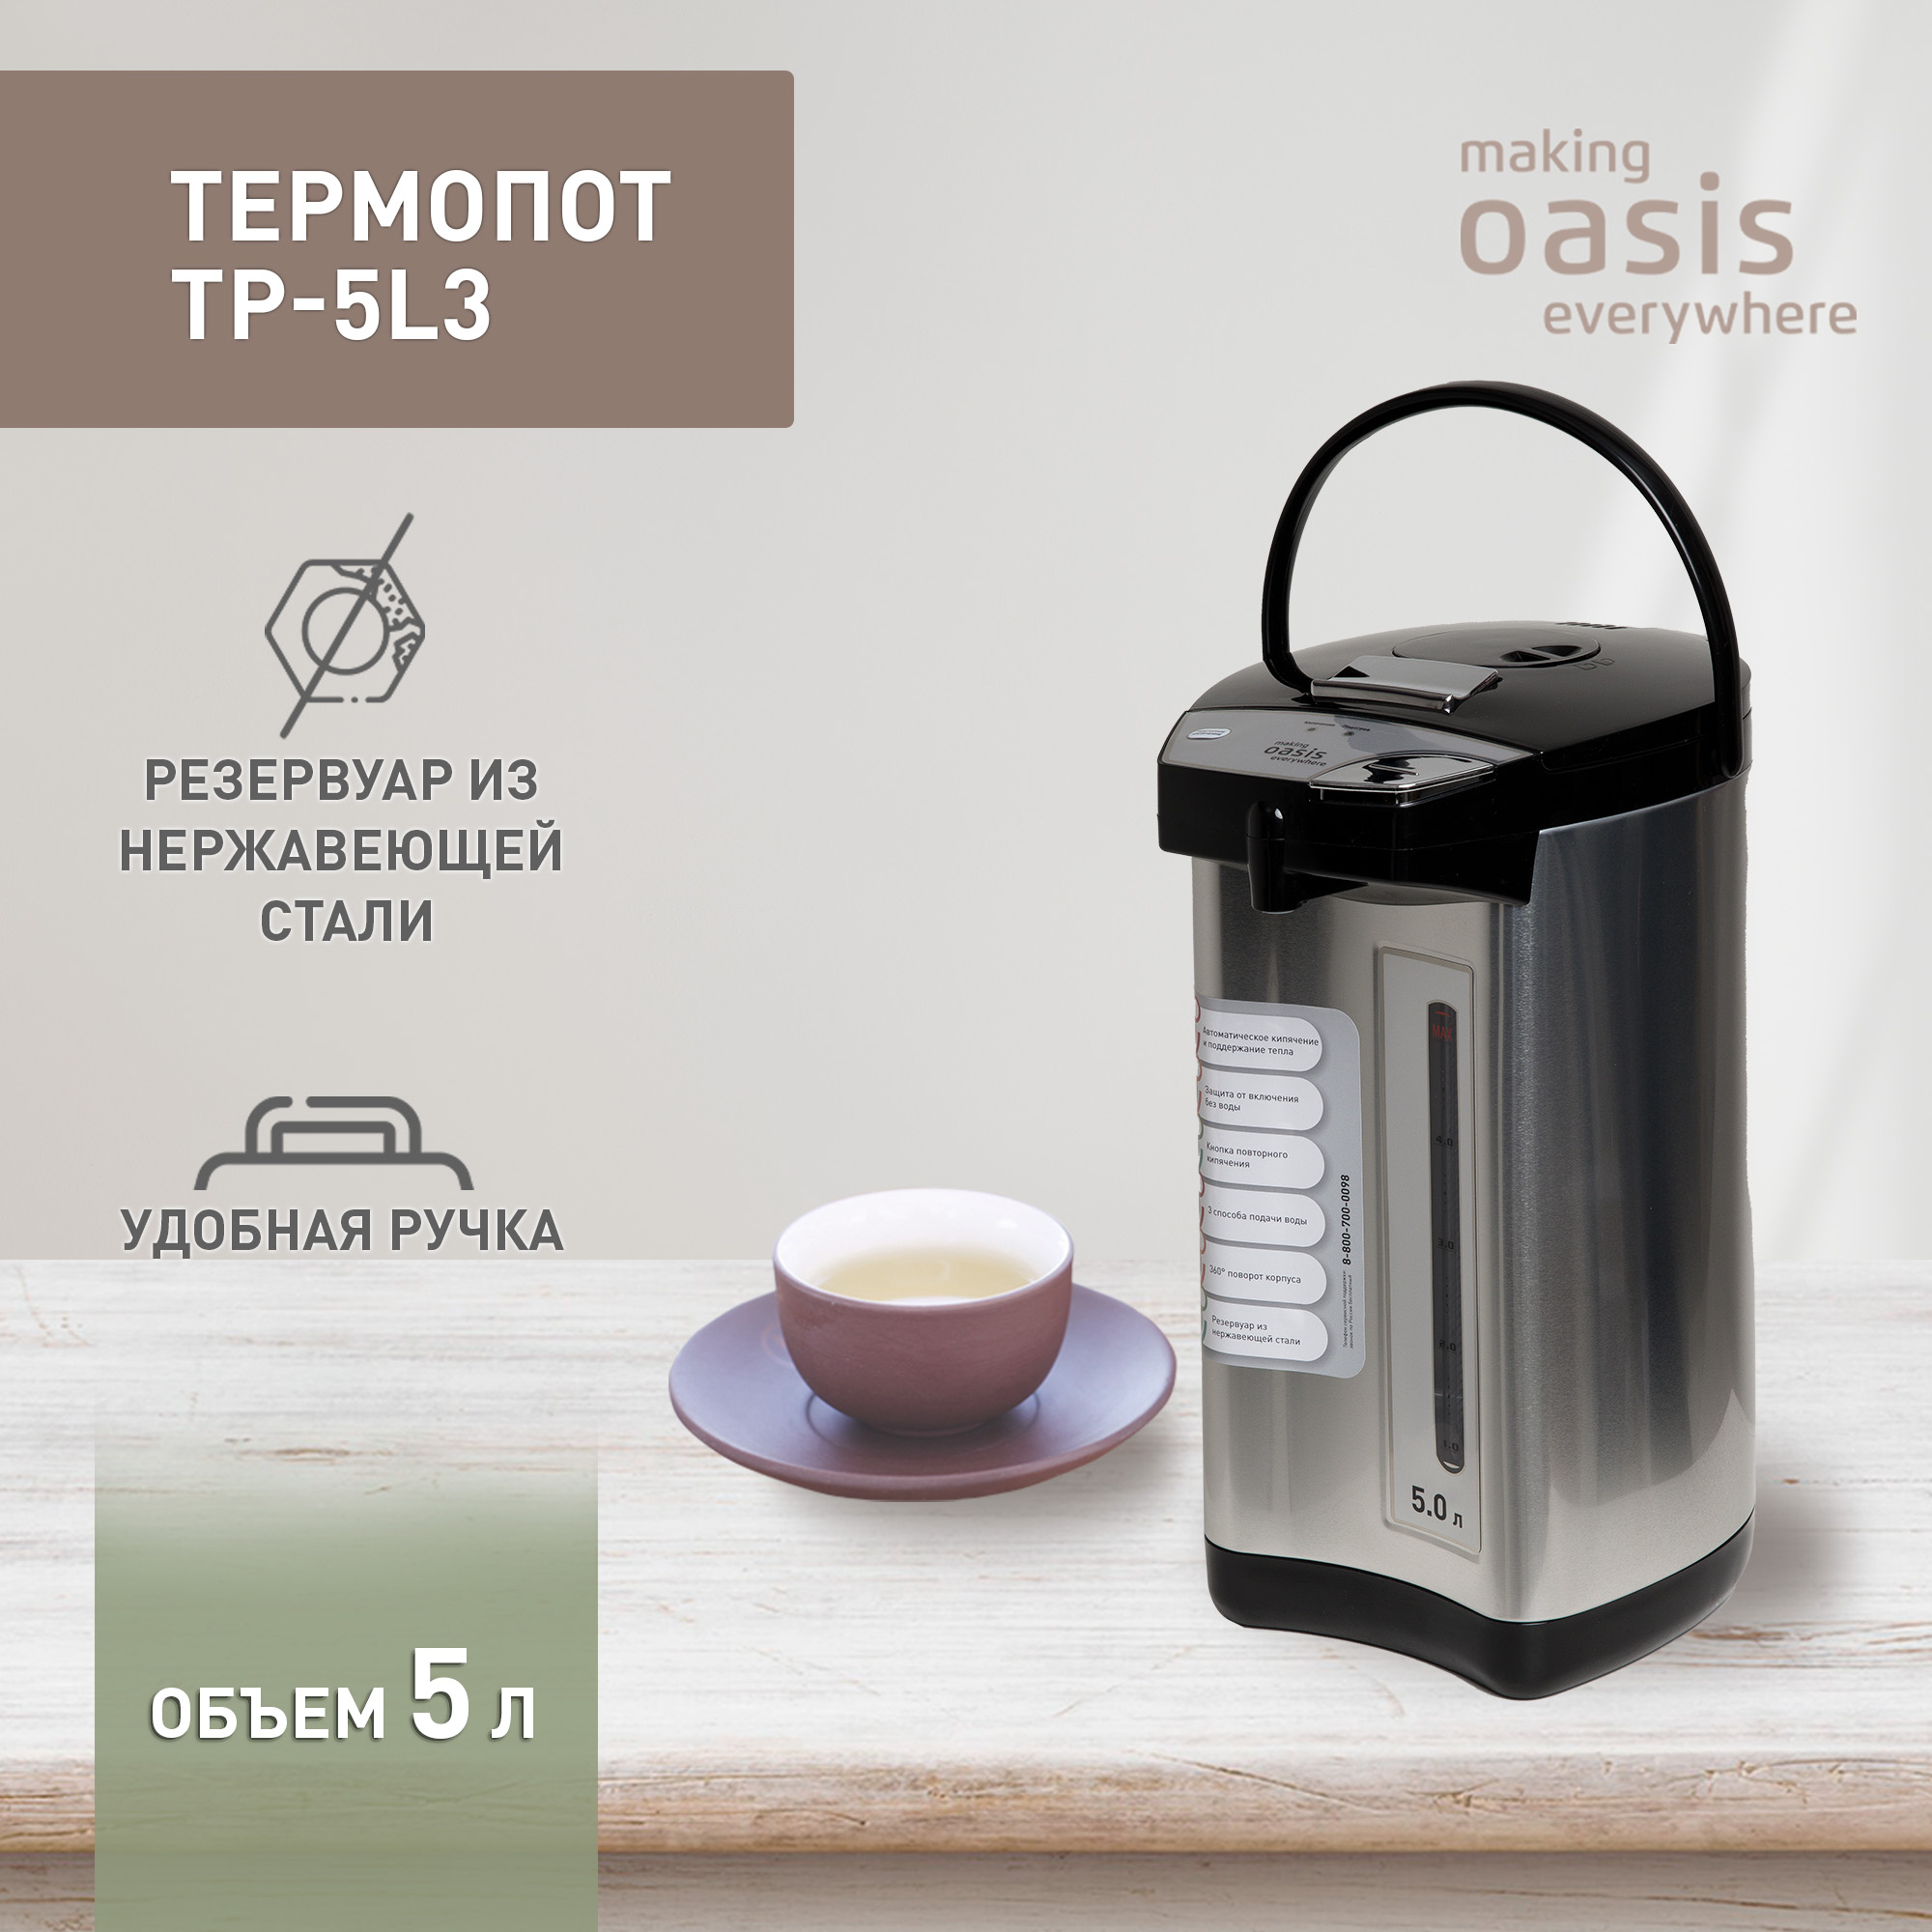 Термопот making oasis everywhere TP-5L3 5 л серый, черный - купить в sotomania.ru, цена на Мегамаркет